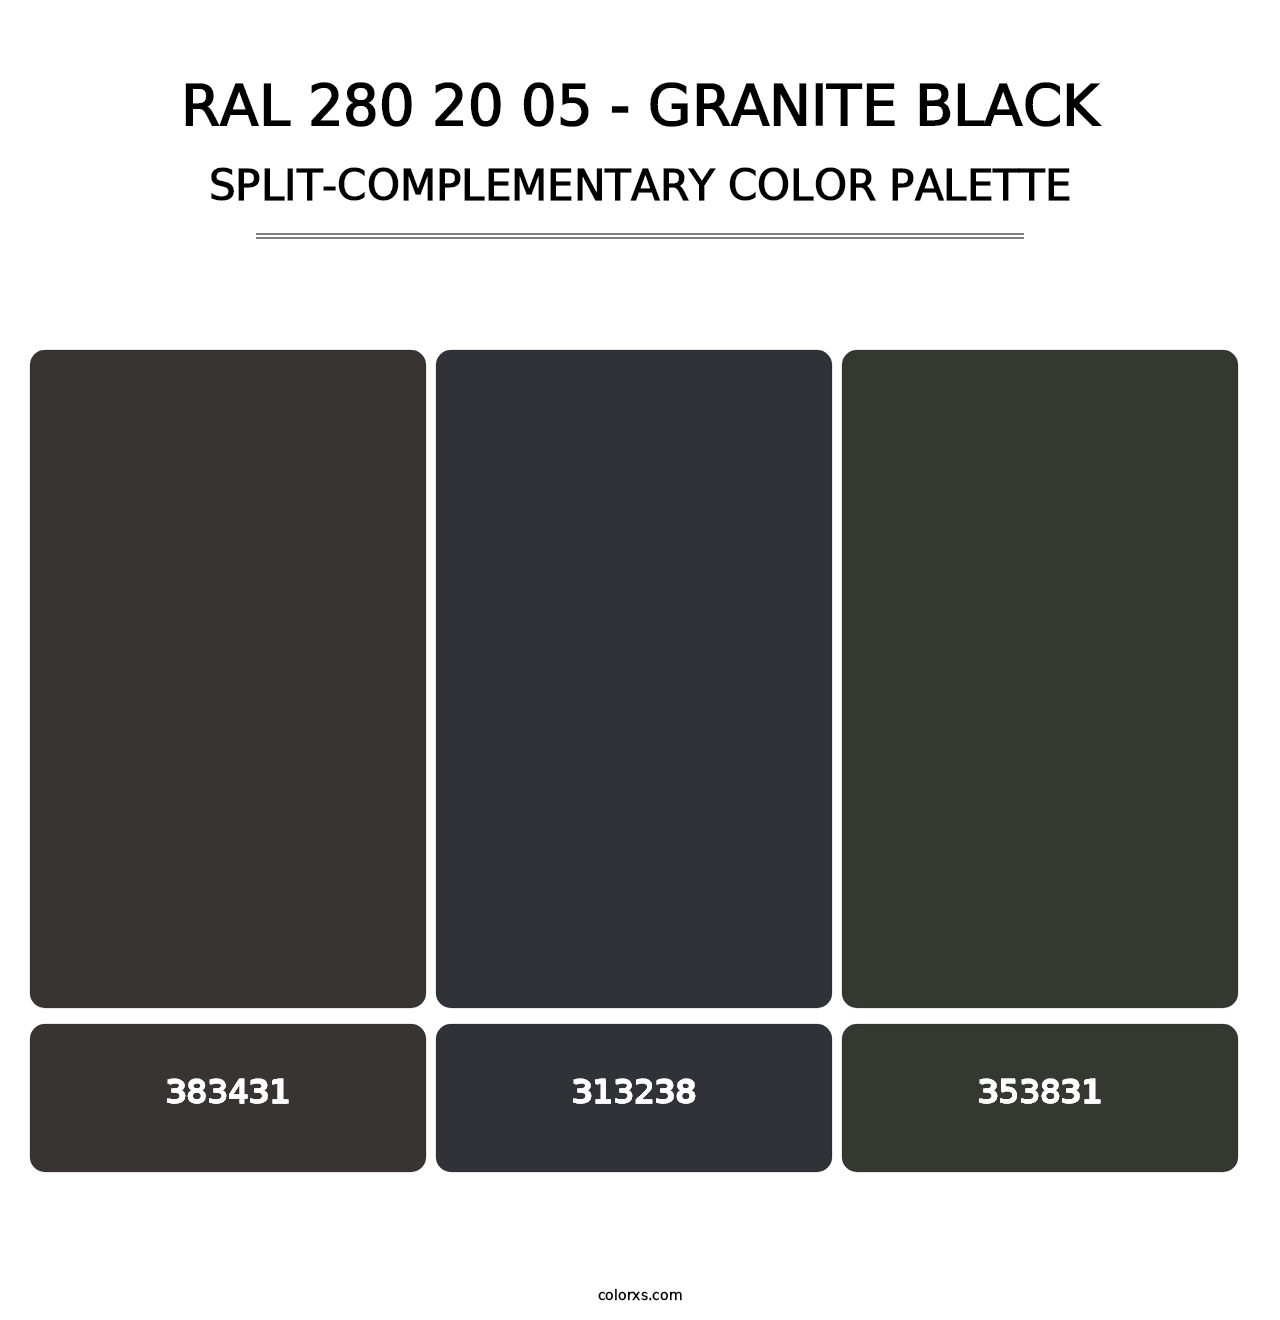 RAL 280 20 05 - Granite Black - Split-Complementary Color Palette